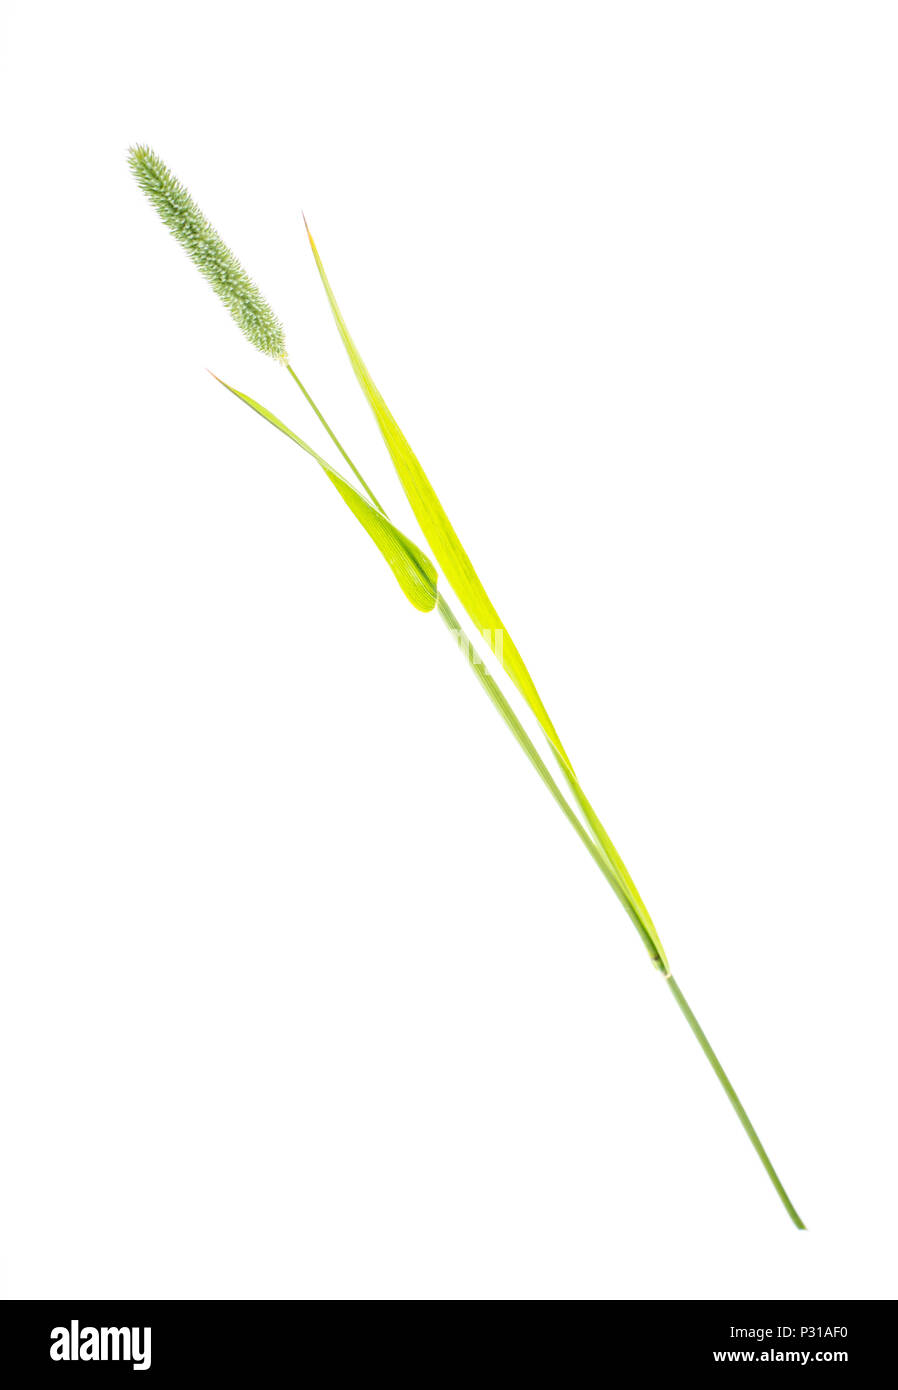 Grass stems Phleum. Studio Photo Stock Photo